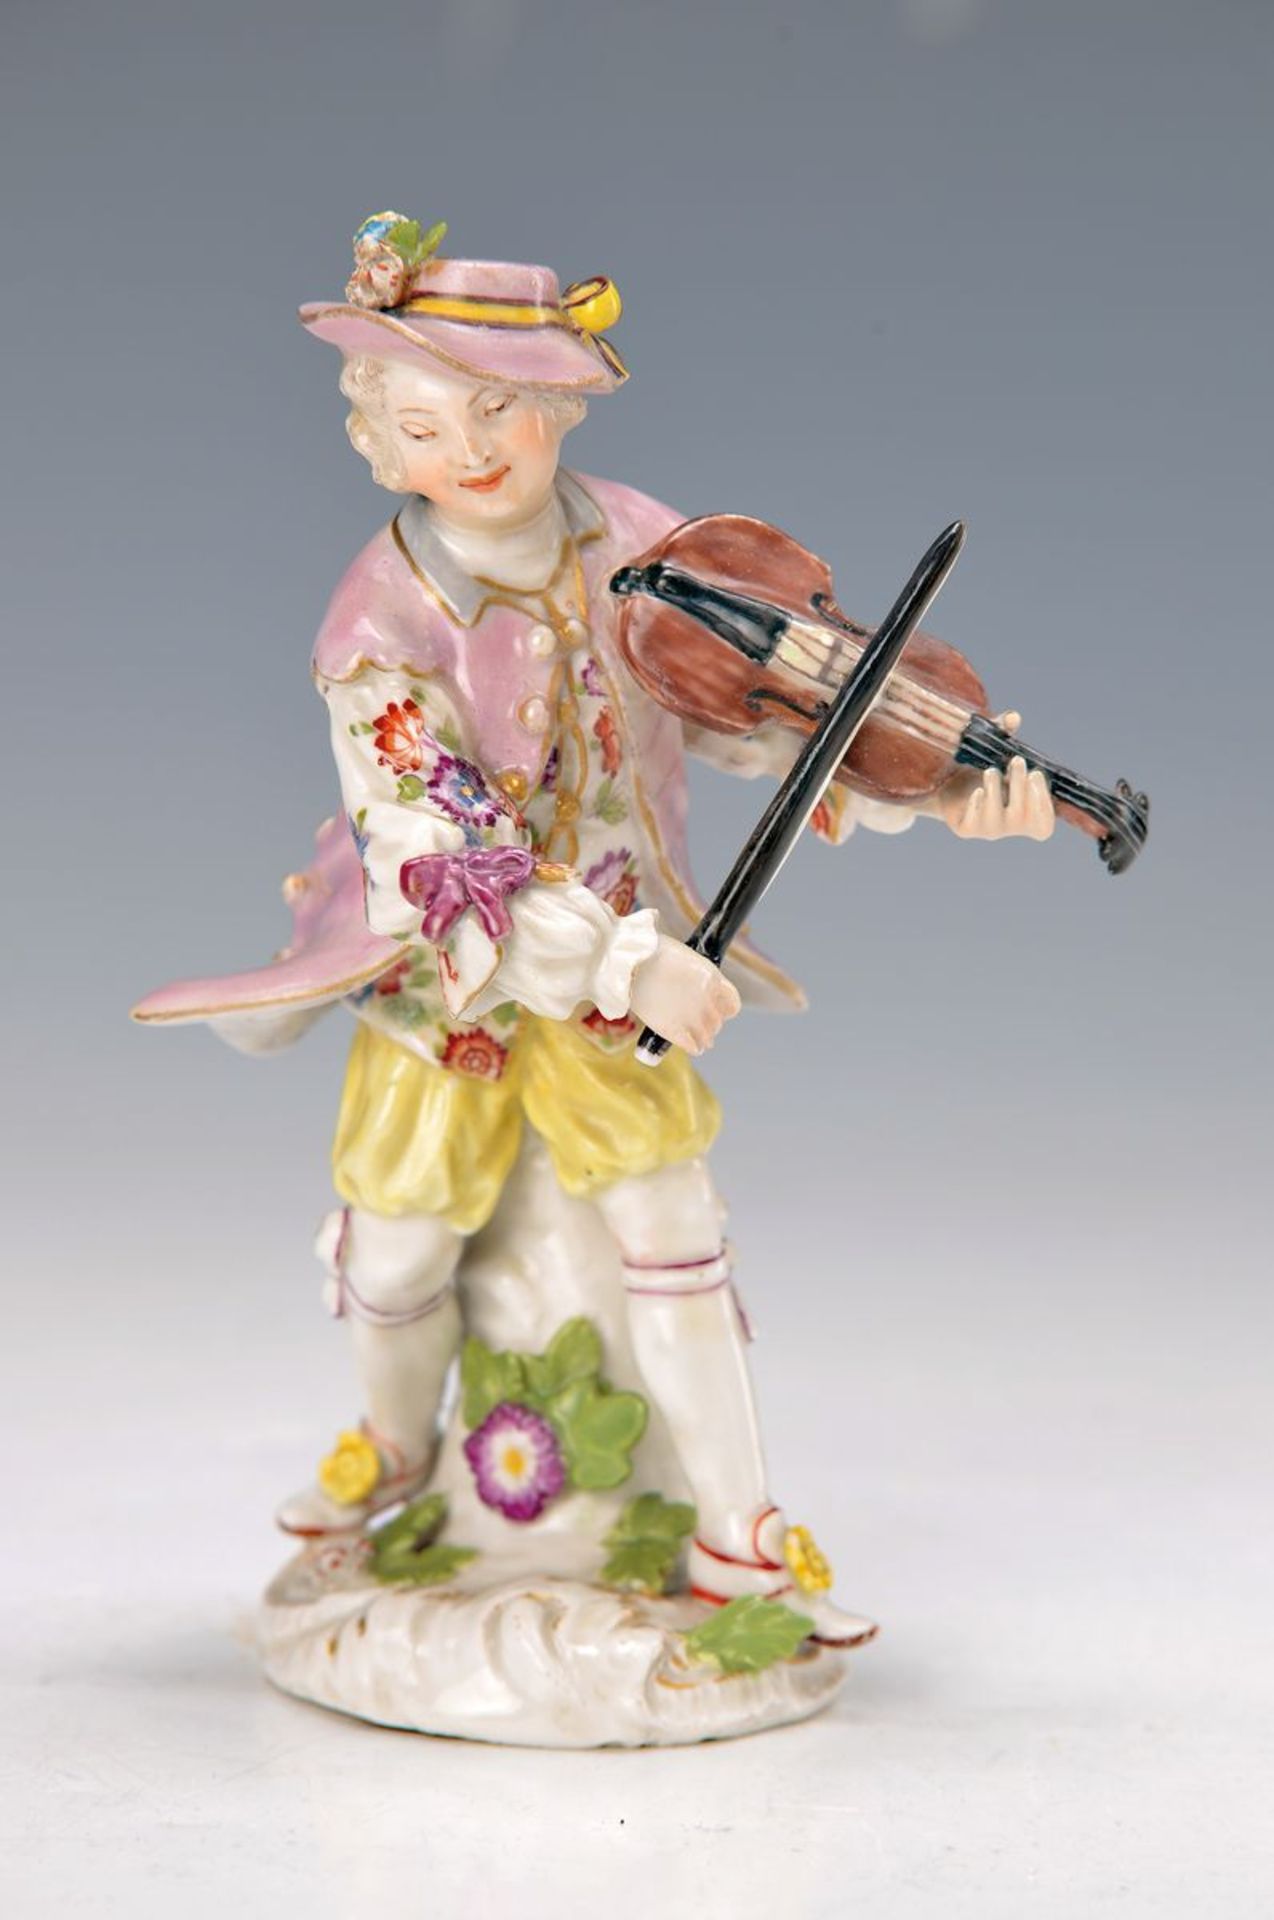 figurine, Meissen, around 1765, point time, Violin player of the gallant band, design by Friedrich